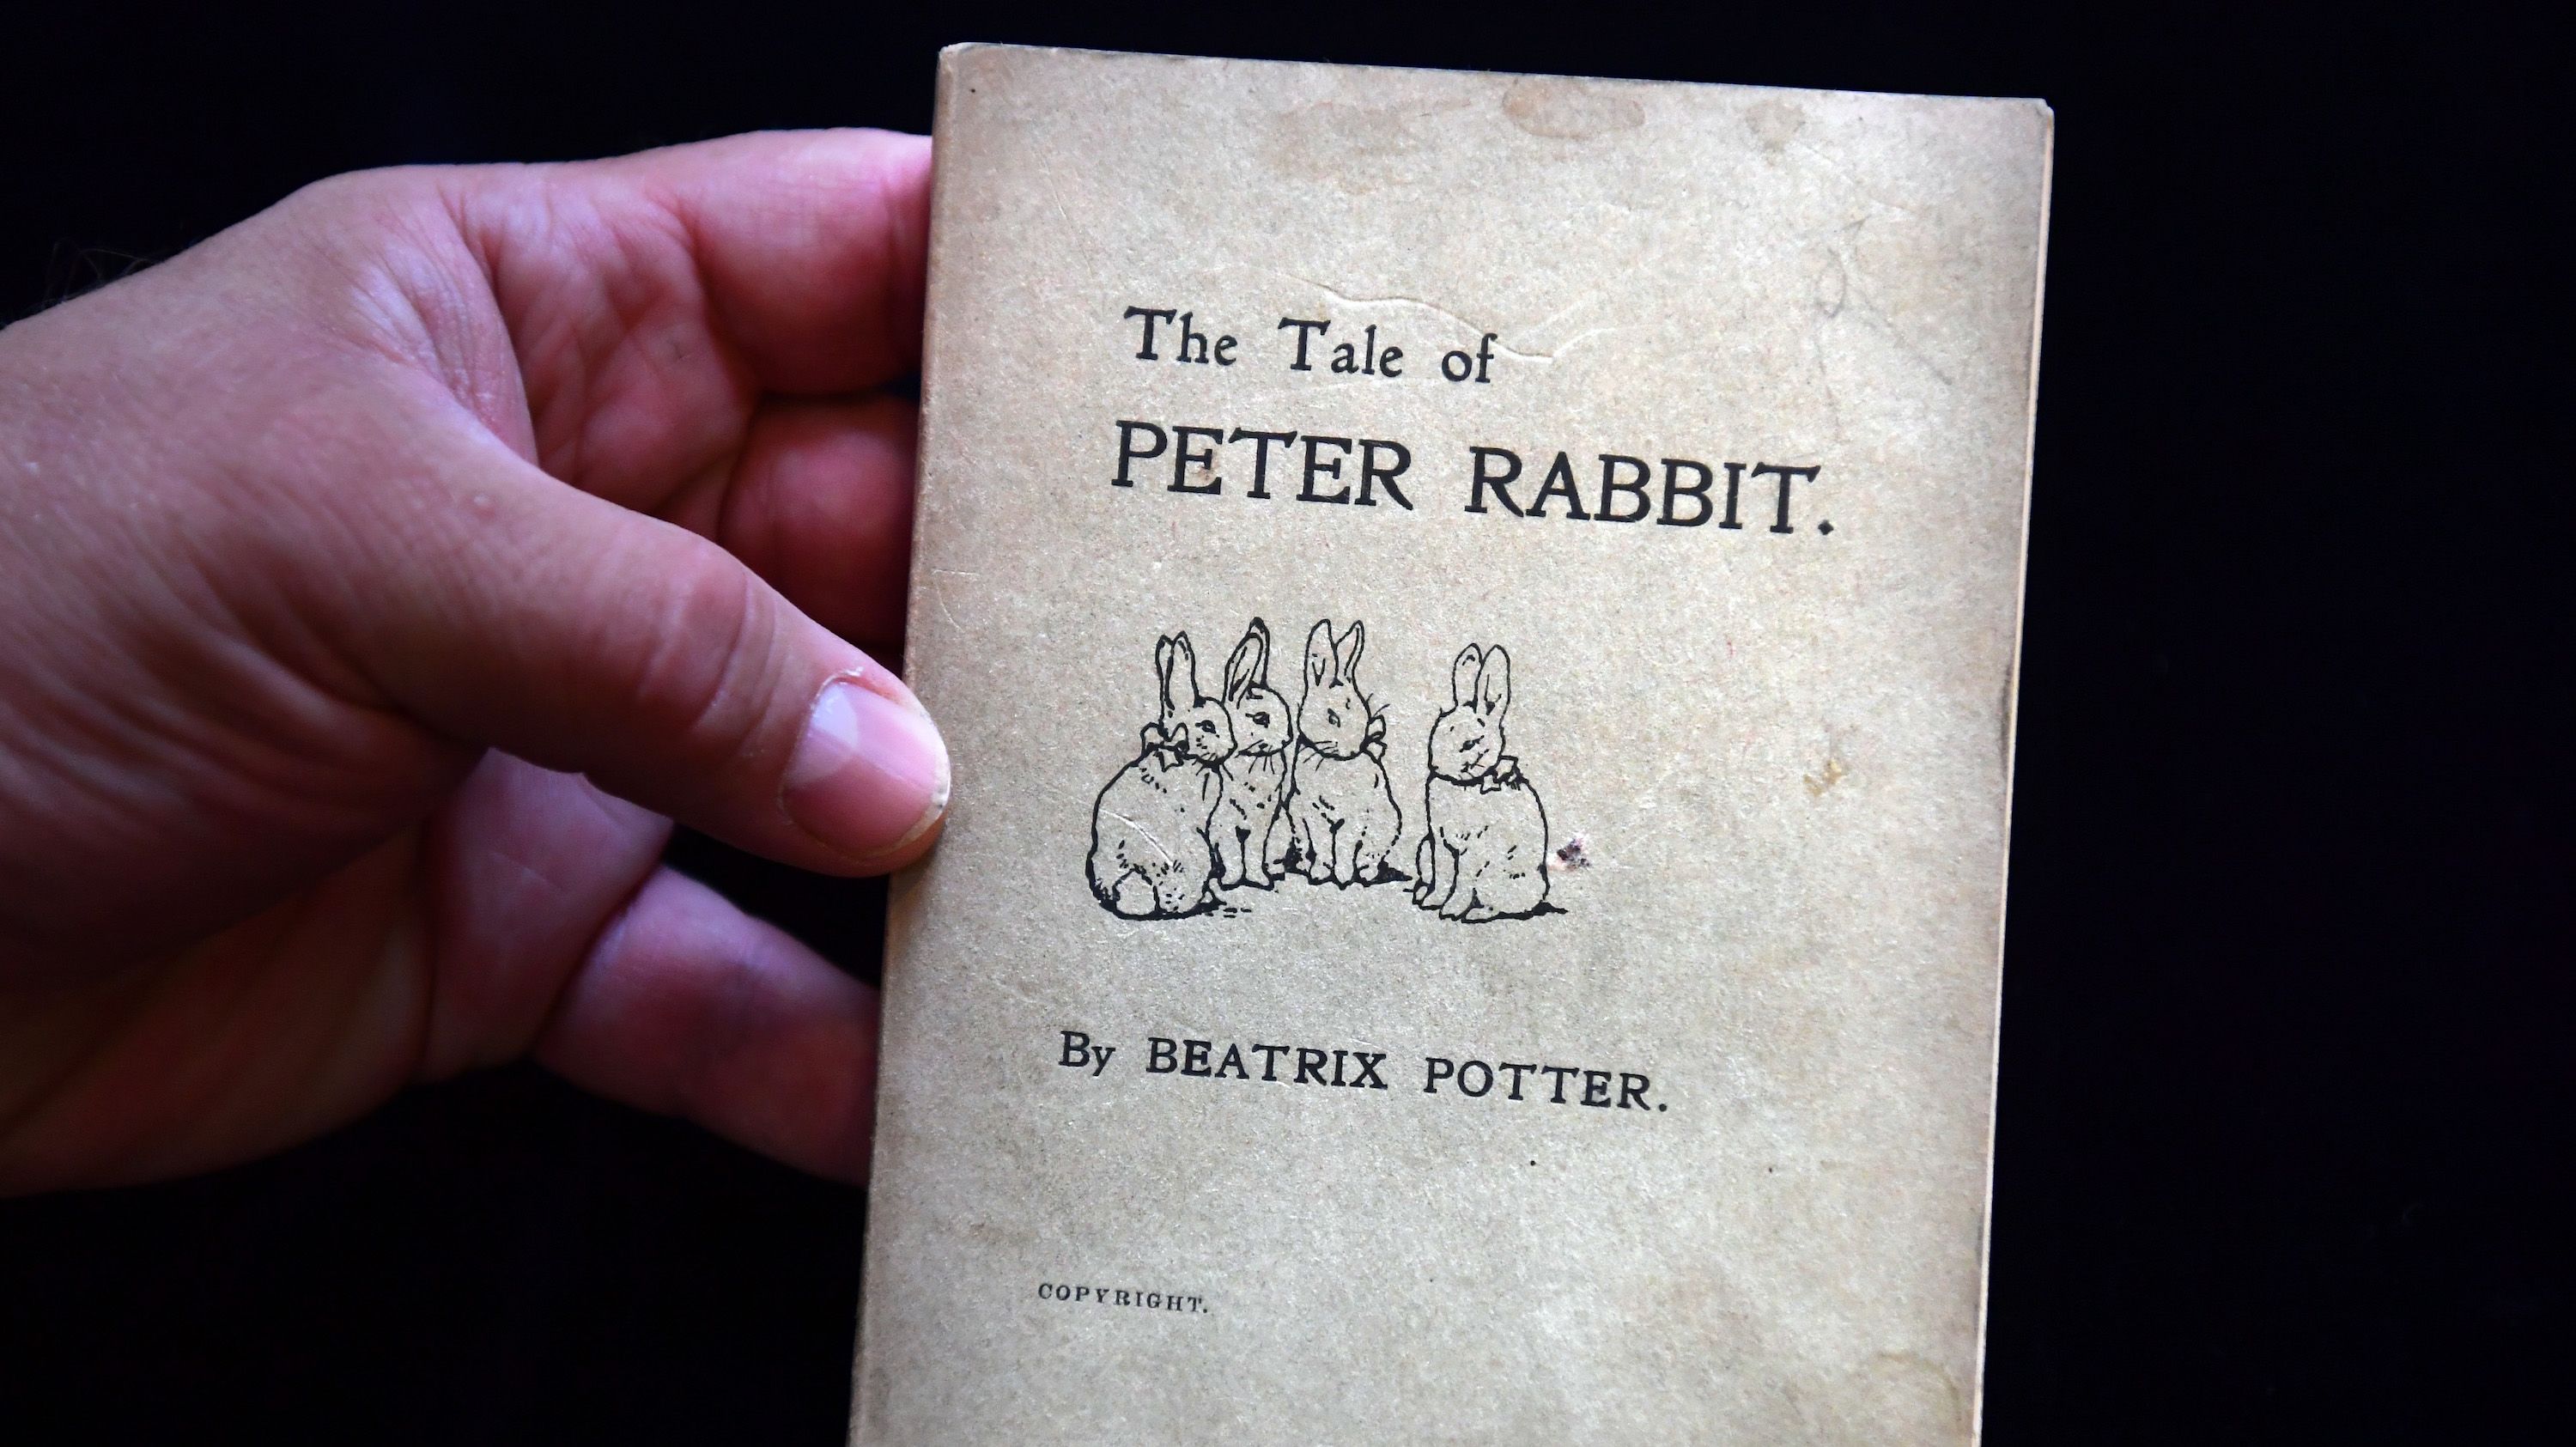 Peter Rabbit Facts